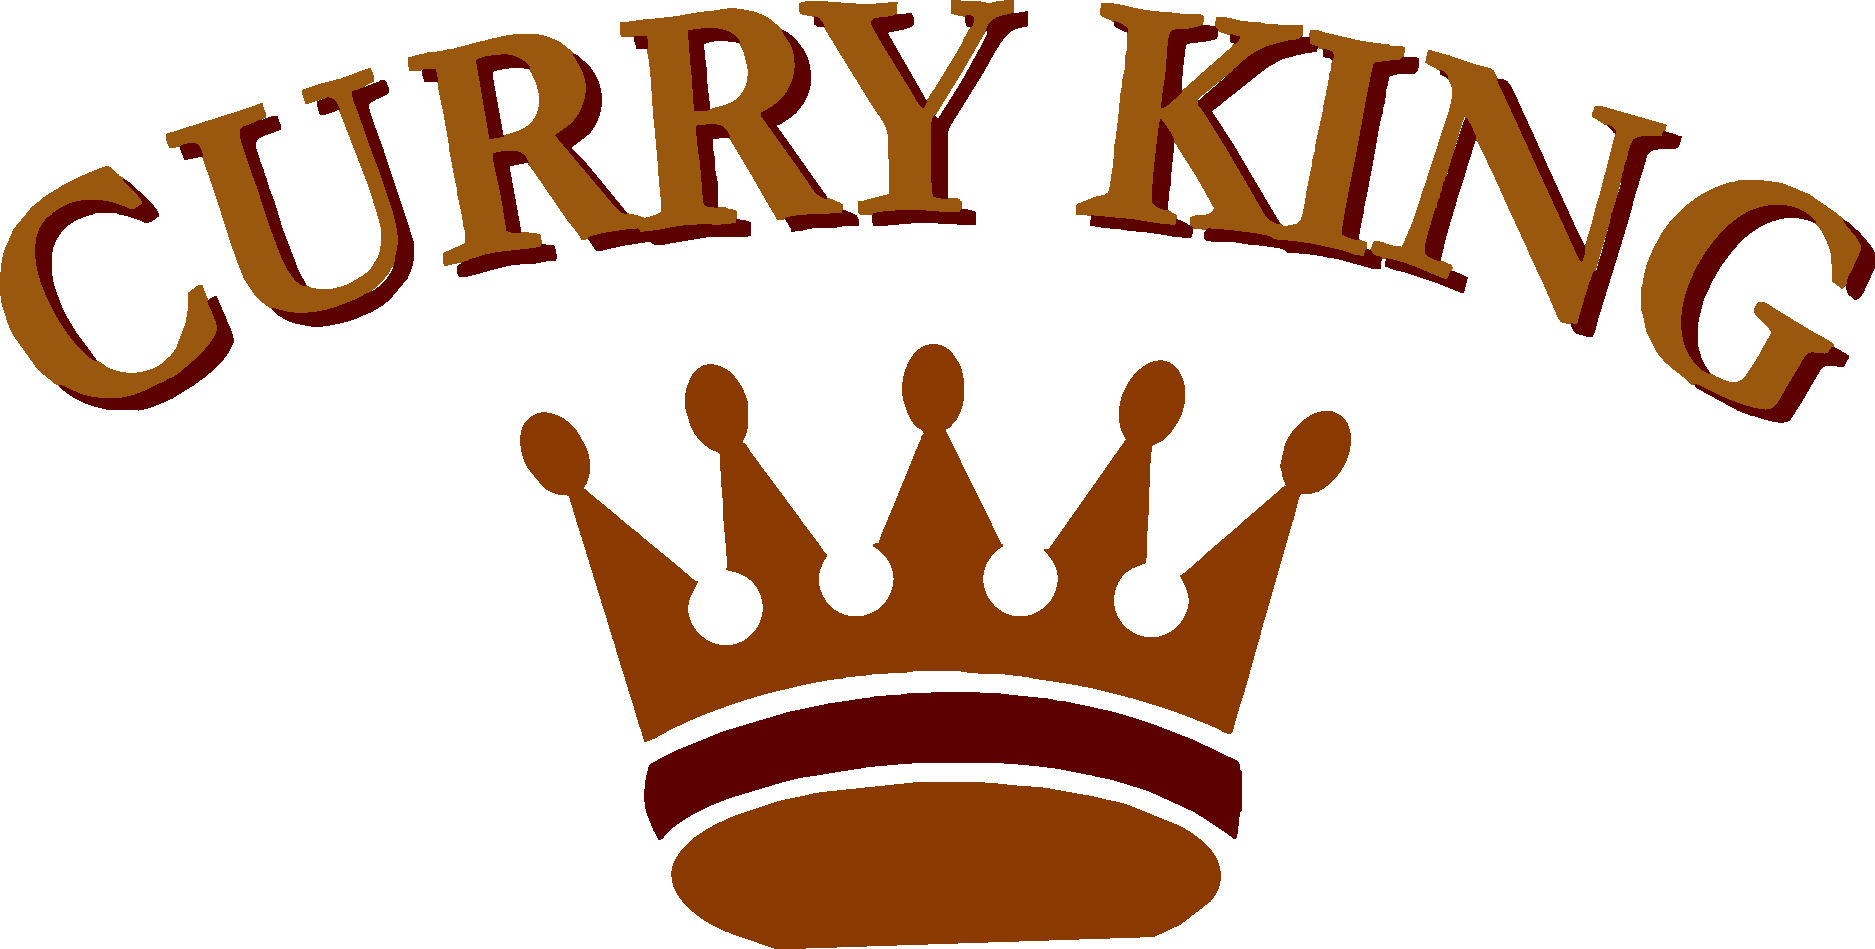 Curry King Logo Vector